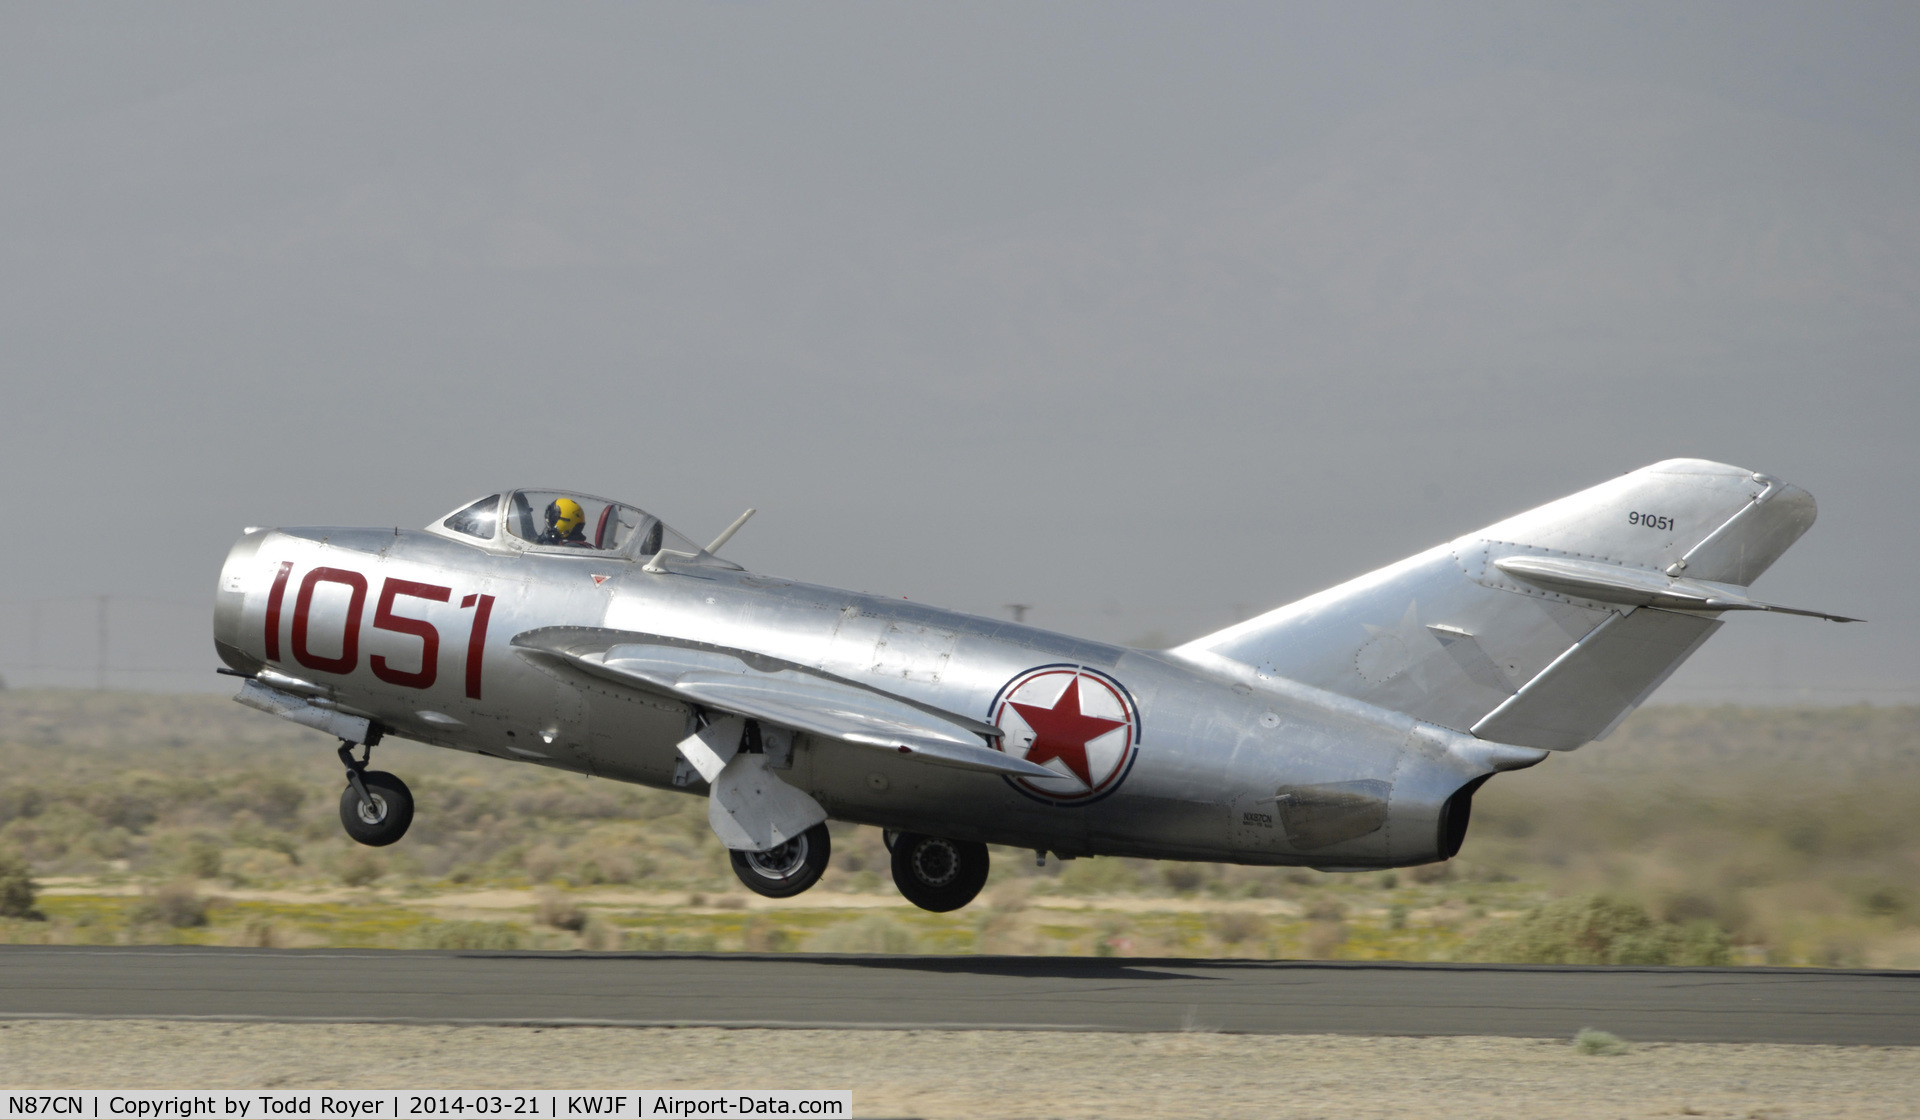 N87CN, Mikoyan-Gurevich MiG-15 C/N 910-51, Departing at Fox Field Lancaster California